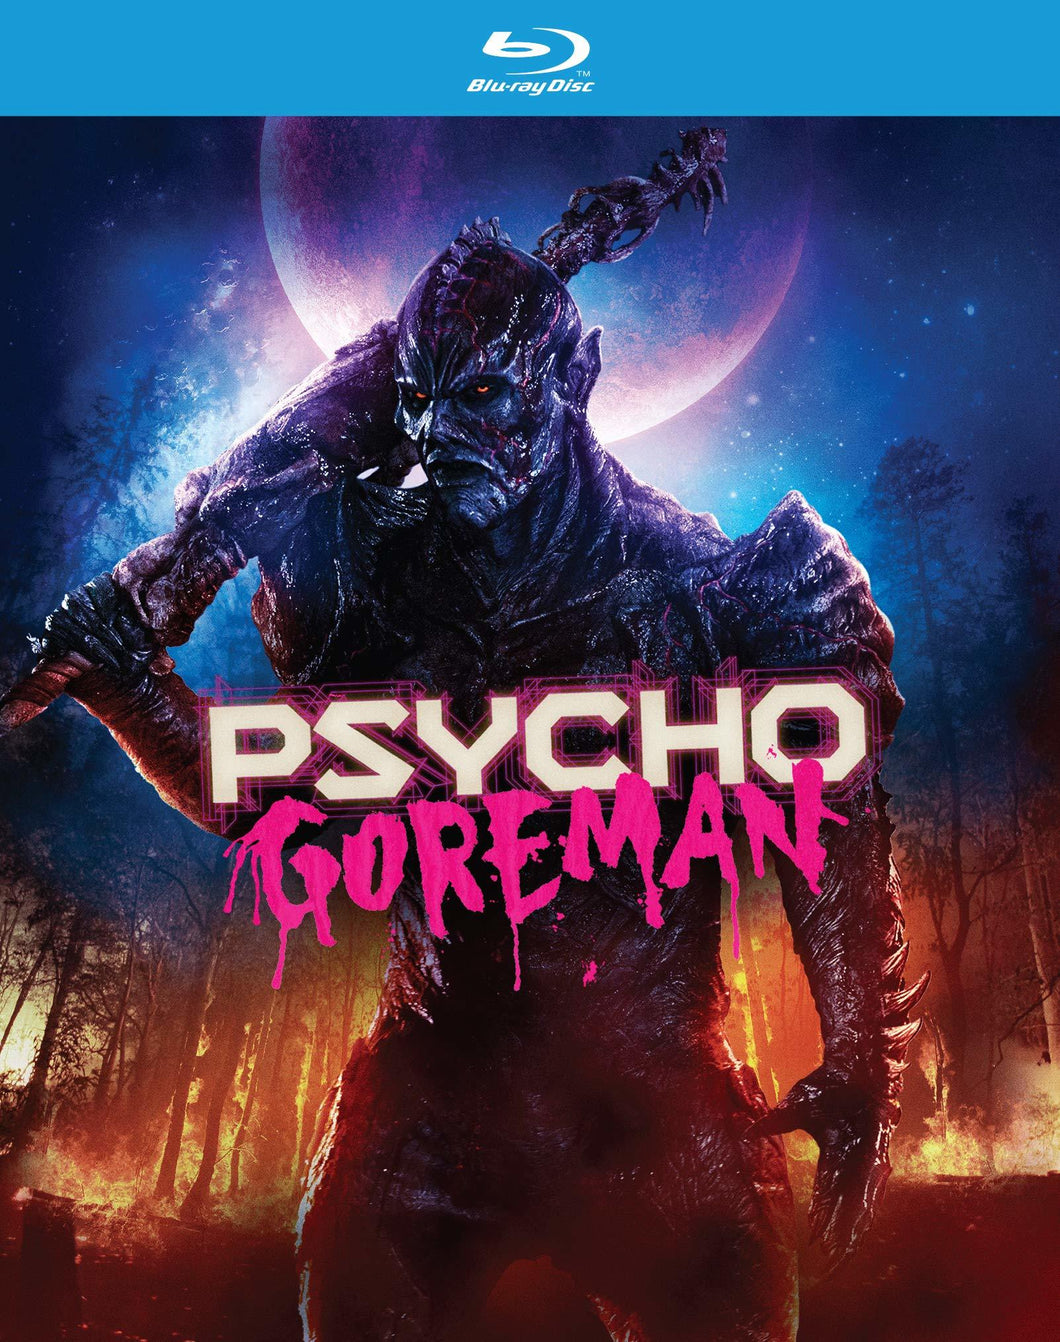 Psycho Goreman (2020) de Steven Kostanski - front cover